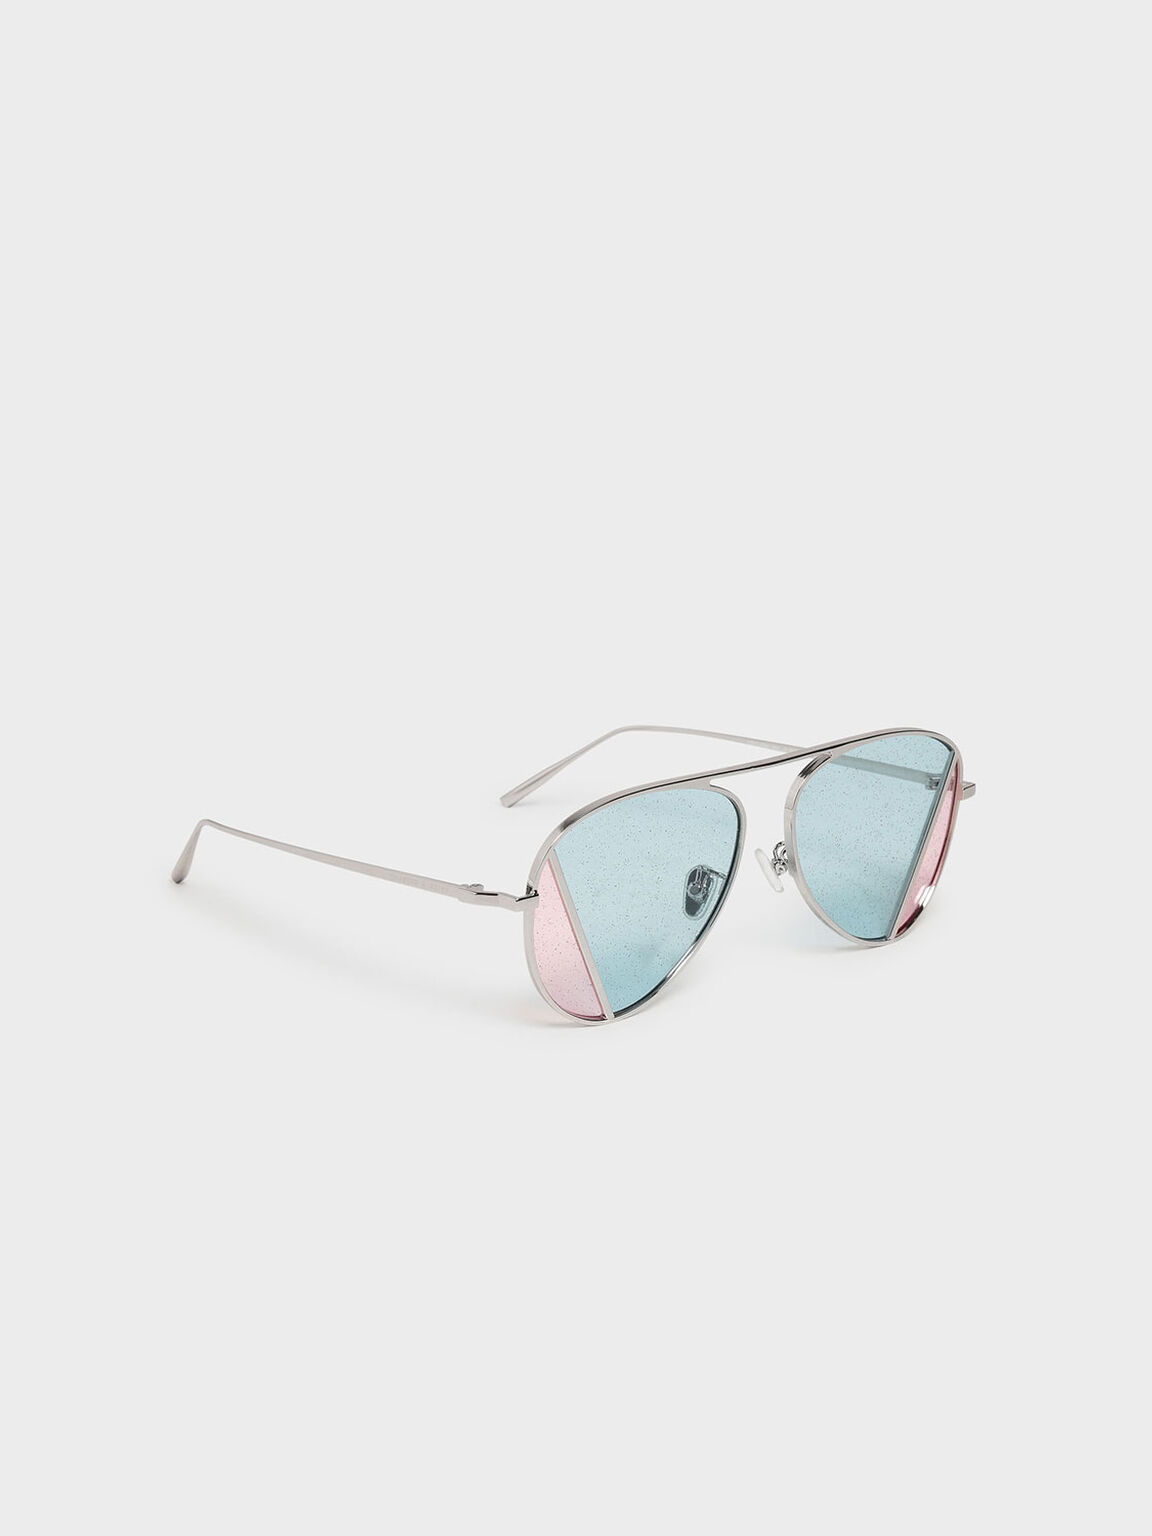 Two-Tone Aviator Sunglasses, Multi, hi-res